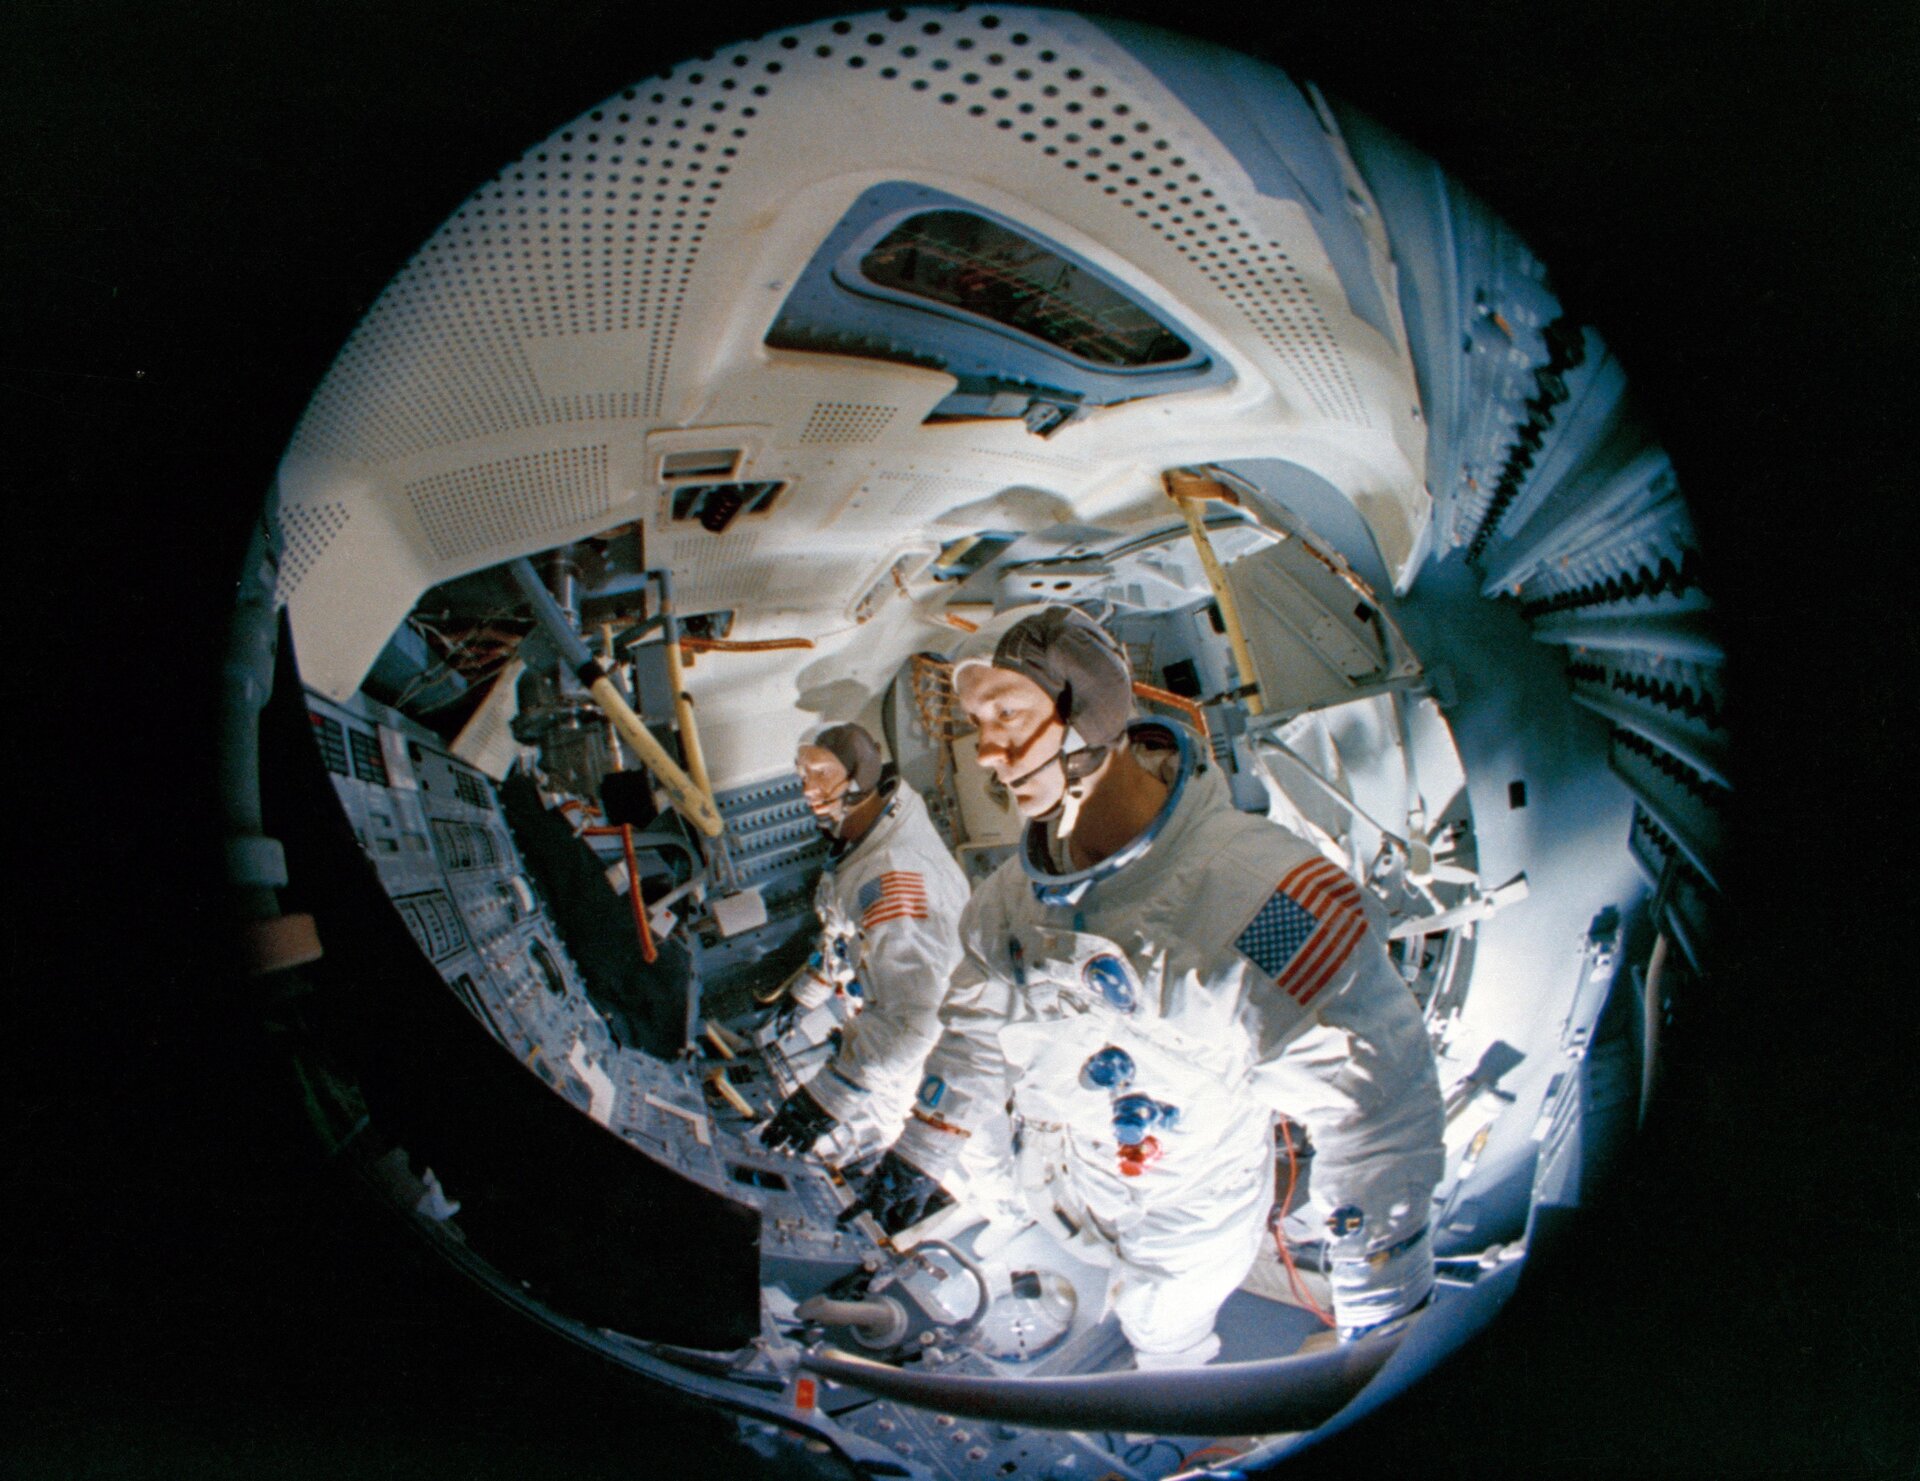 Apollo 9 astronauts McDivitt and Schweickart in simulator